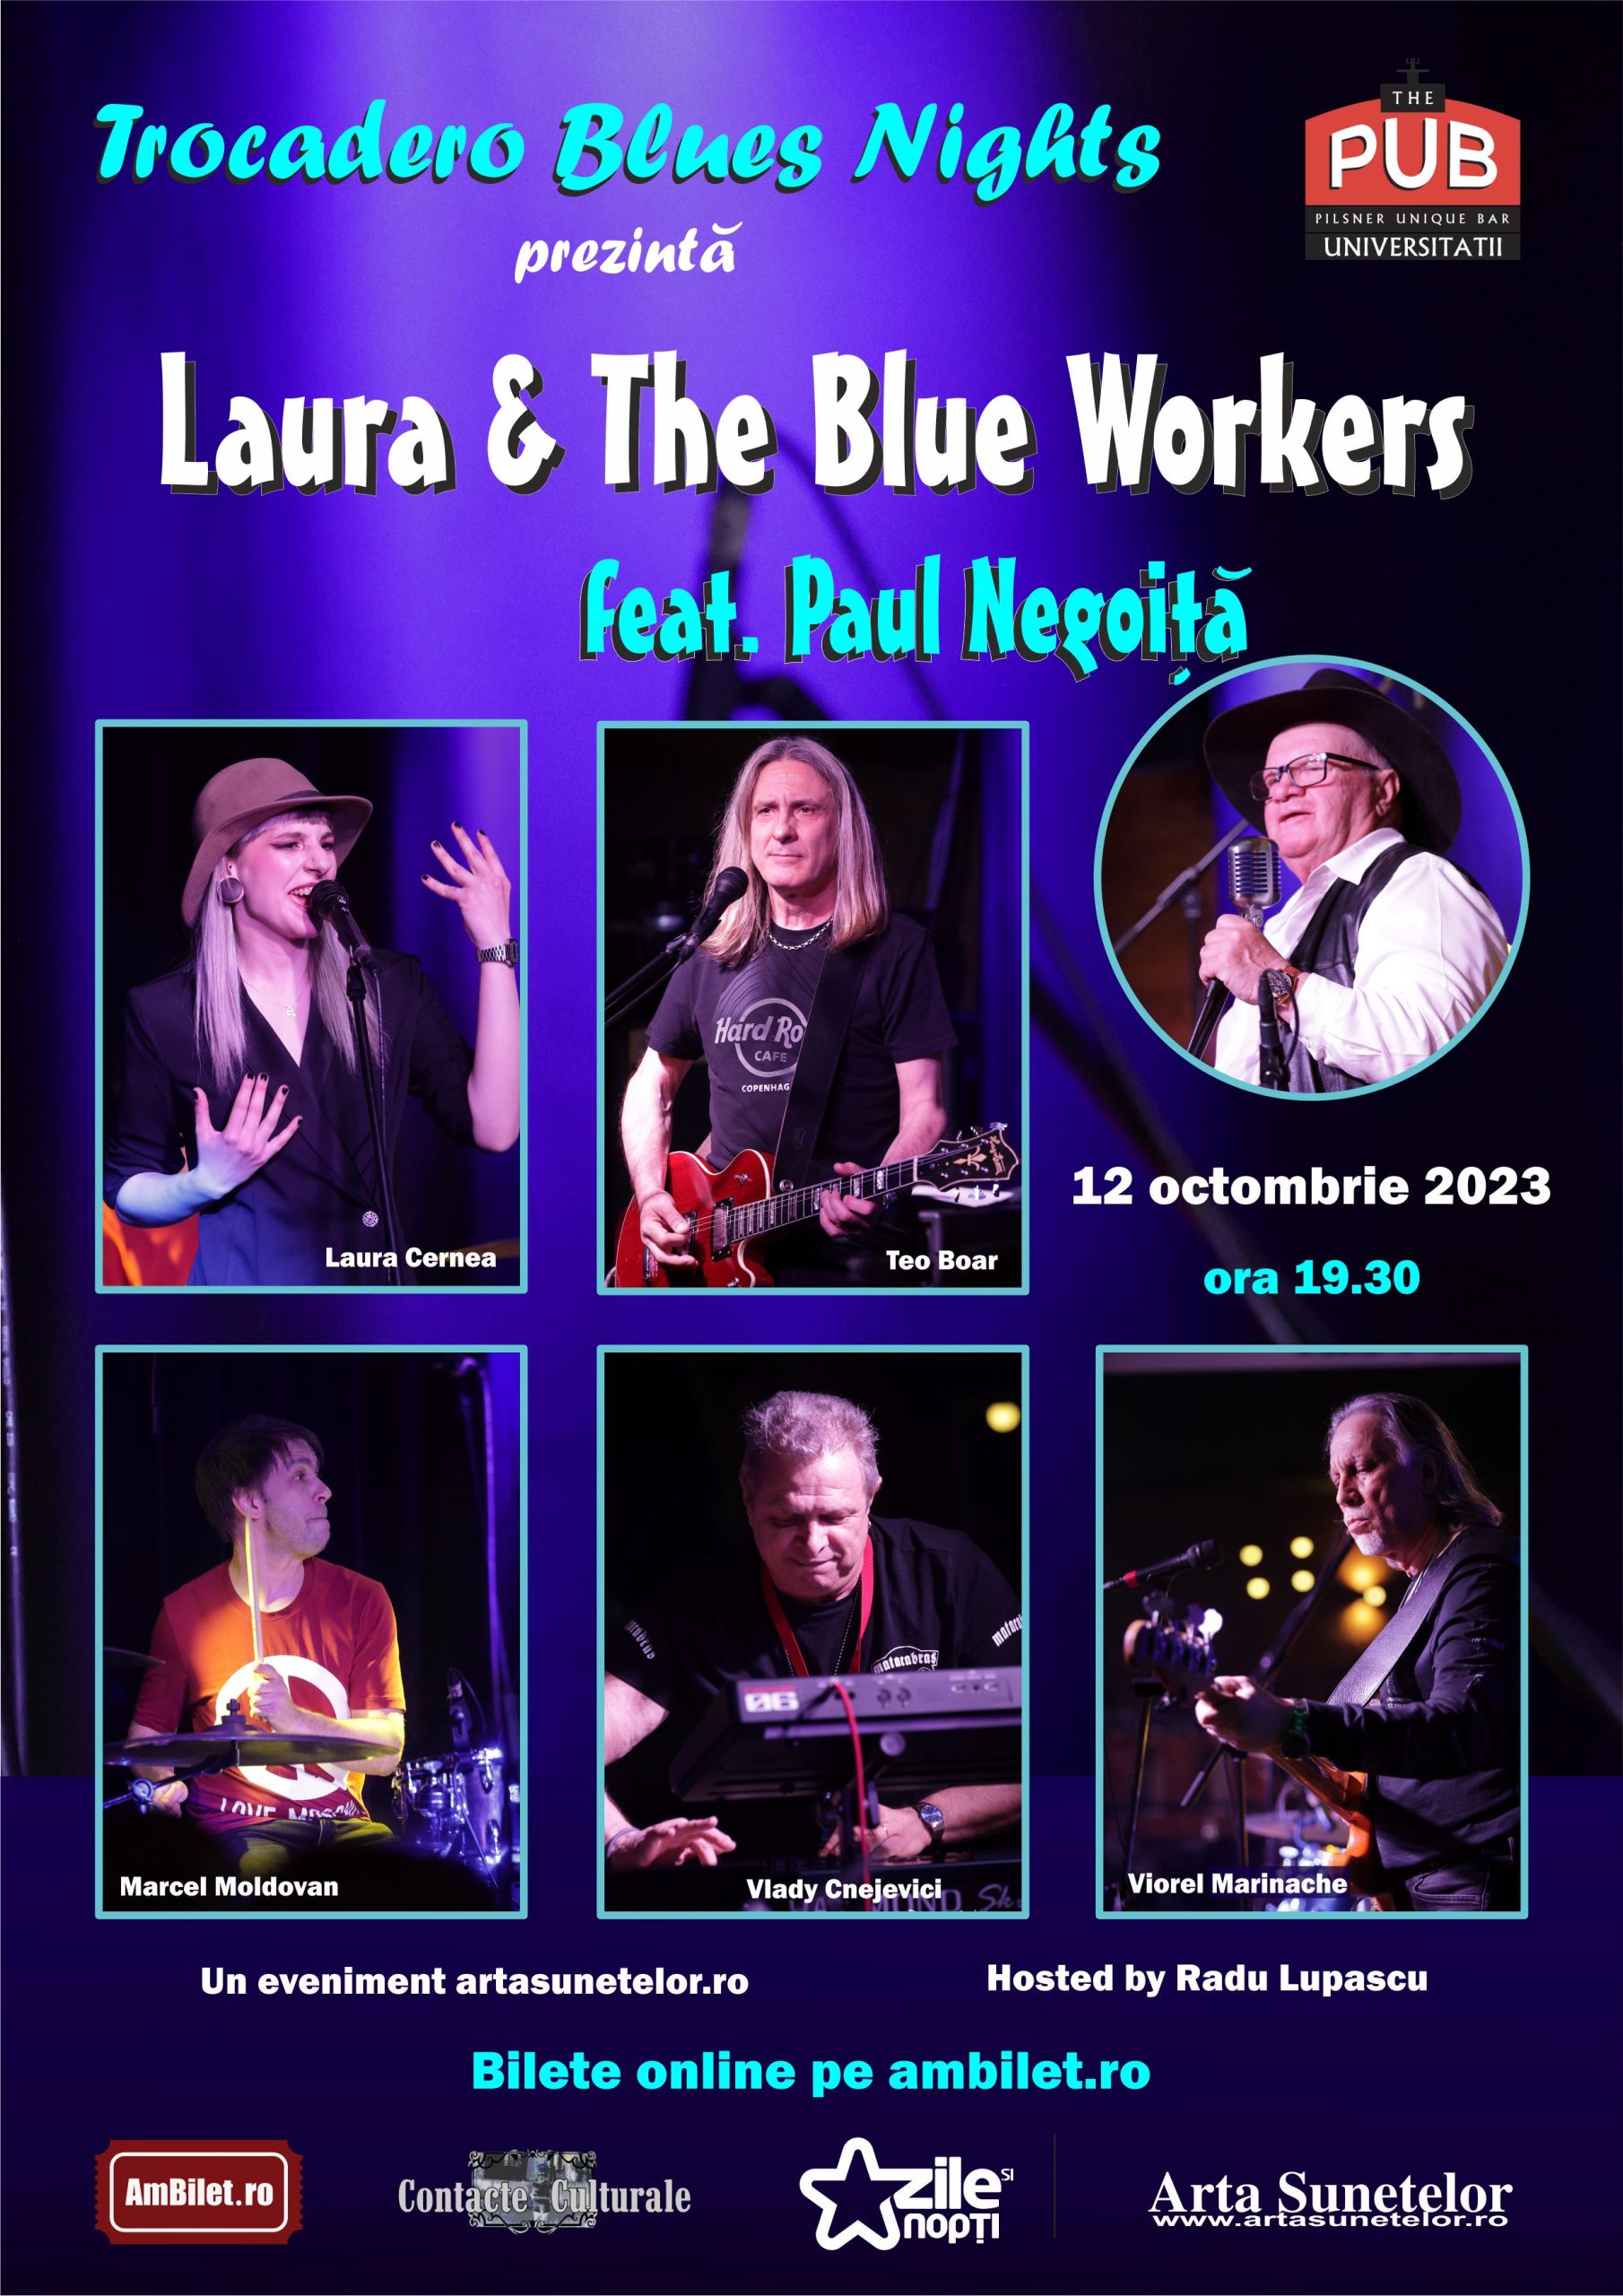 Trocadero Blues Nights: Laura & The Blue Workers featuring Paul Negoiţă